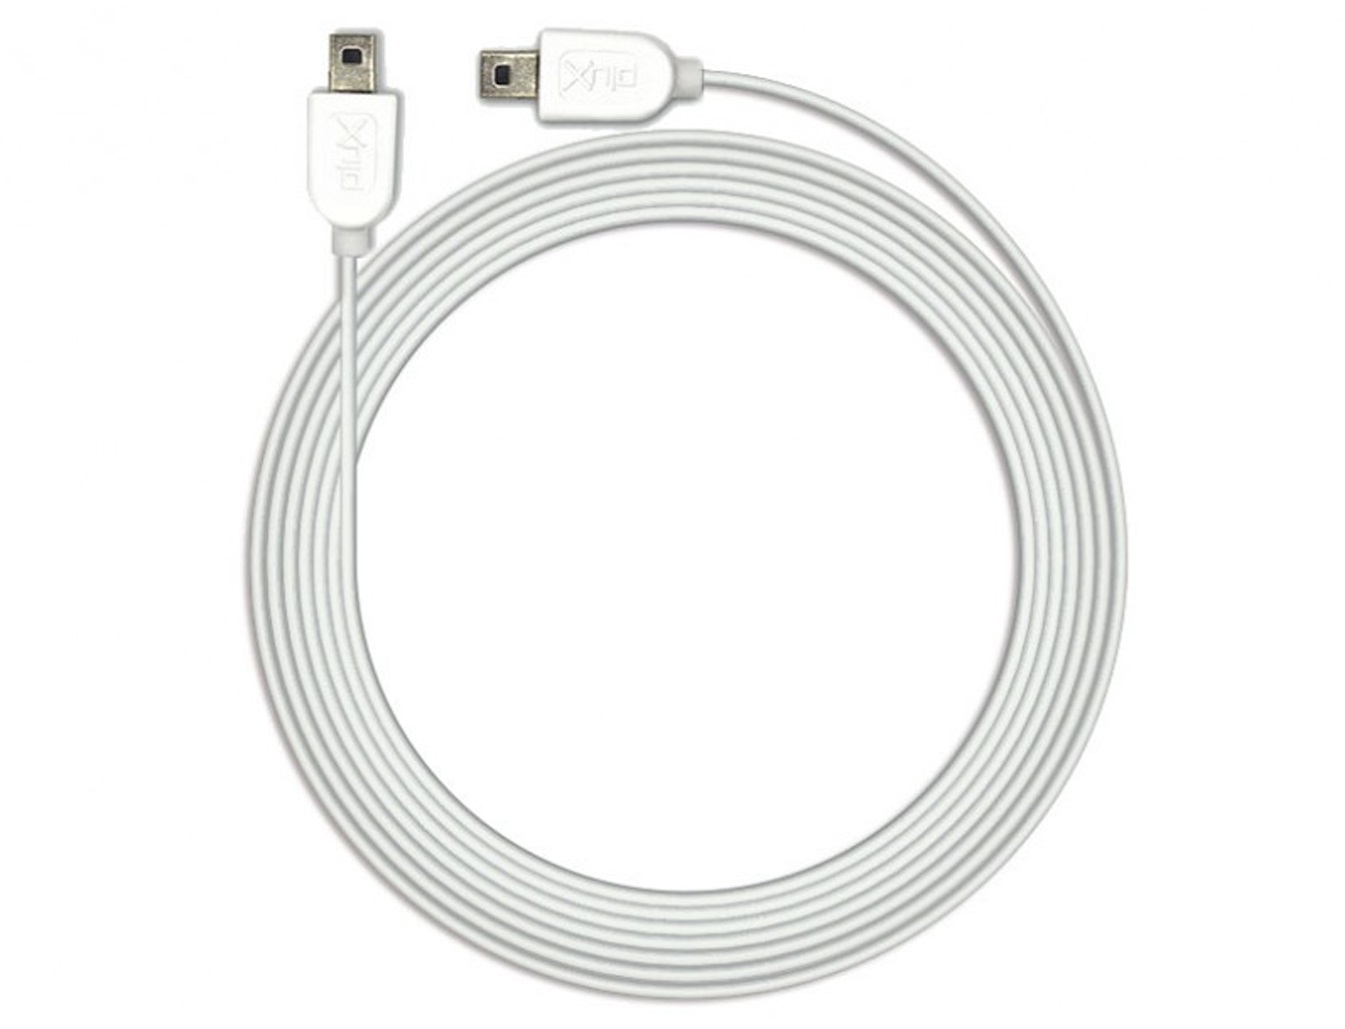 Cable de Sensor Bitalino (100 cm) - Haga Clic para Ampliar